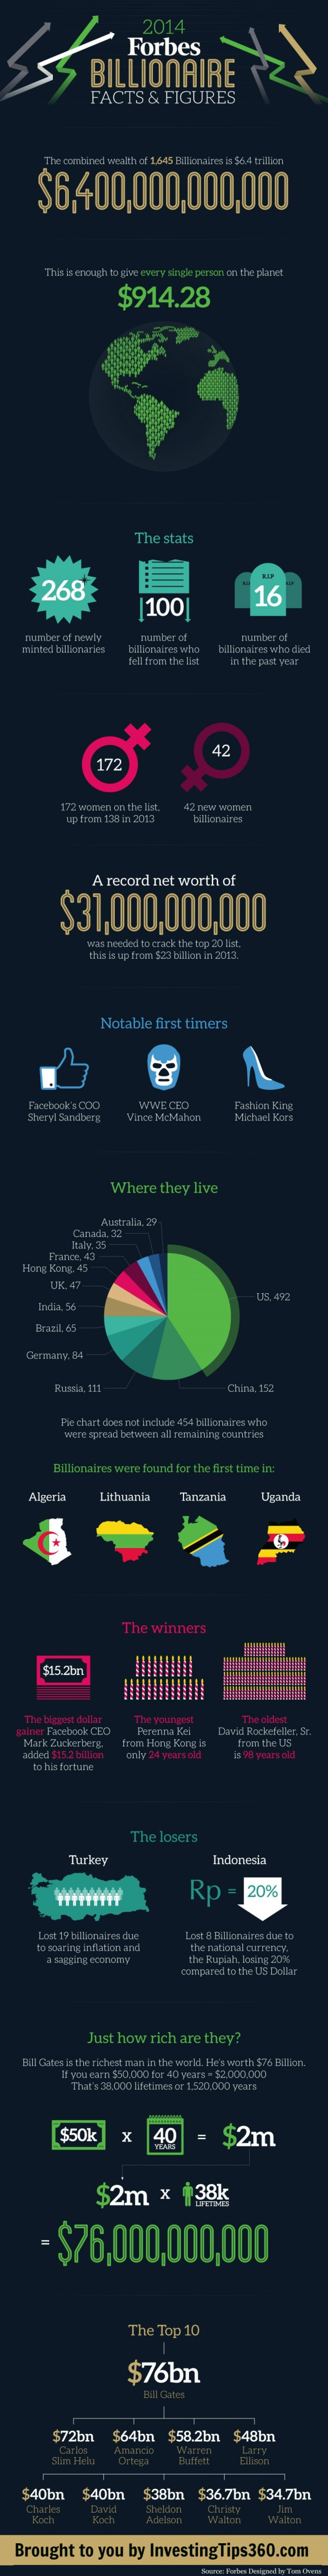 2014-forbes-billionaire-list-facts--figures_533a913b257c4_w1500